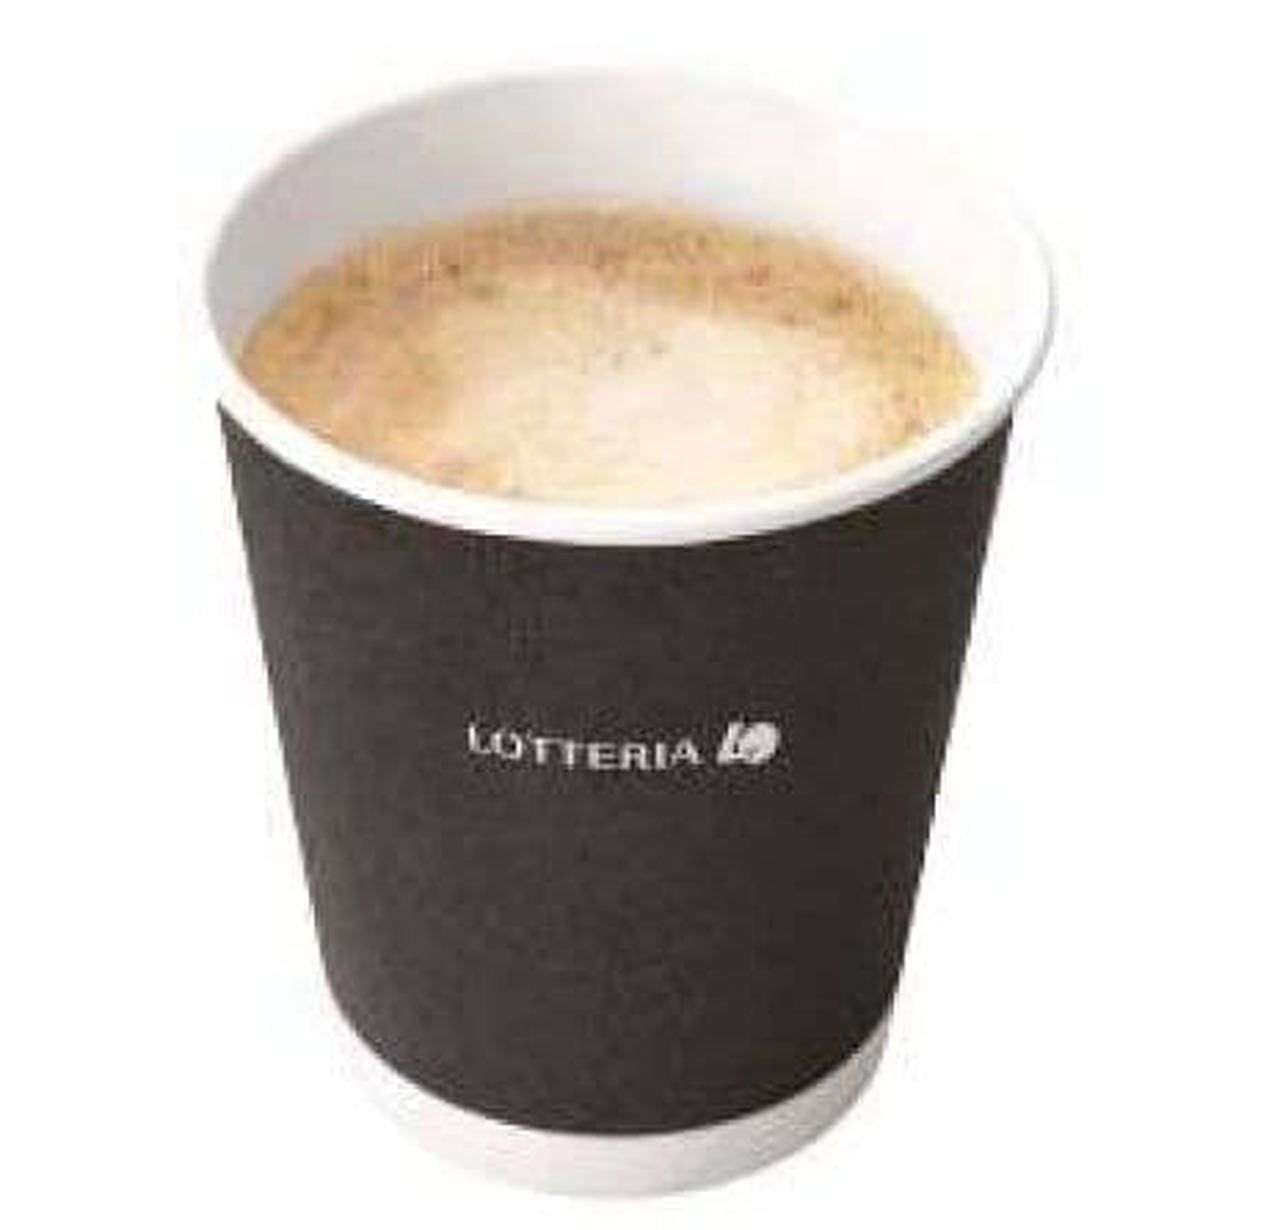 Lotteria "Hot Cafe Latte"